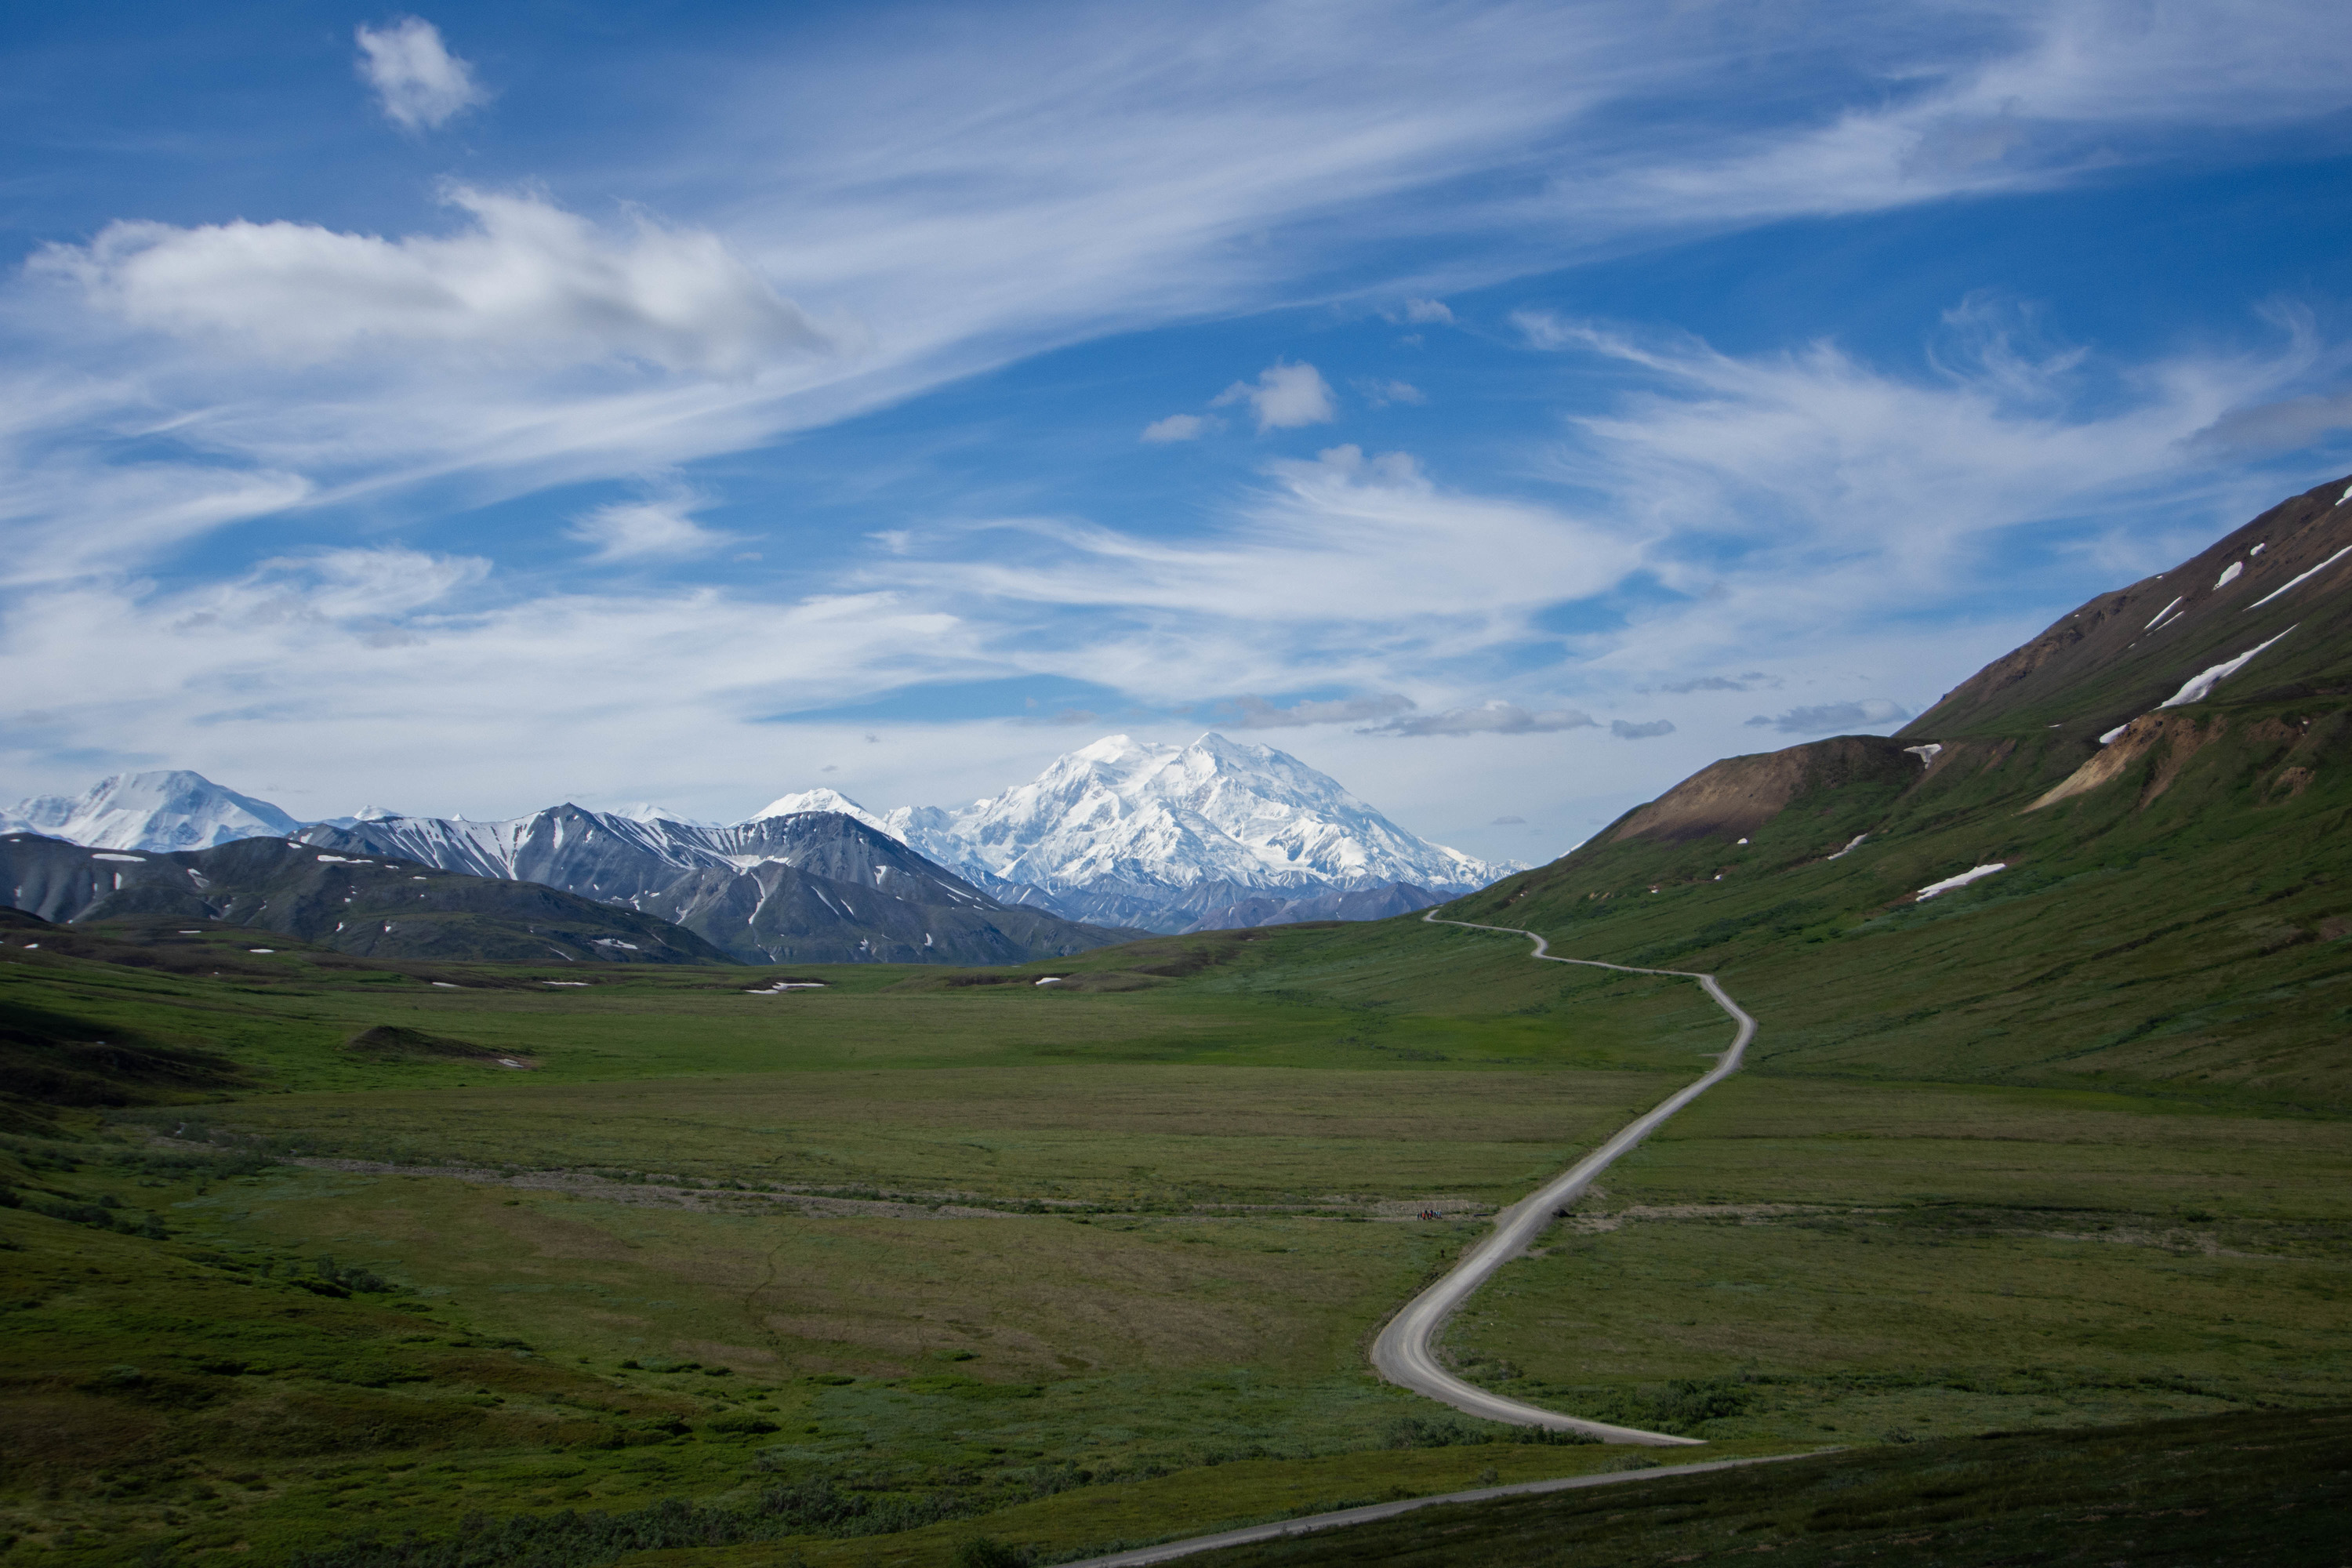 a dirt road leading through mountainous landscape toward a huge, snowy mountain